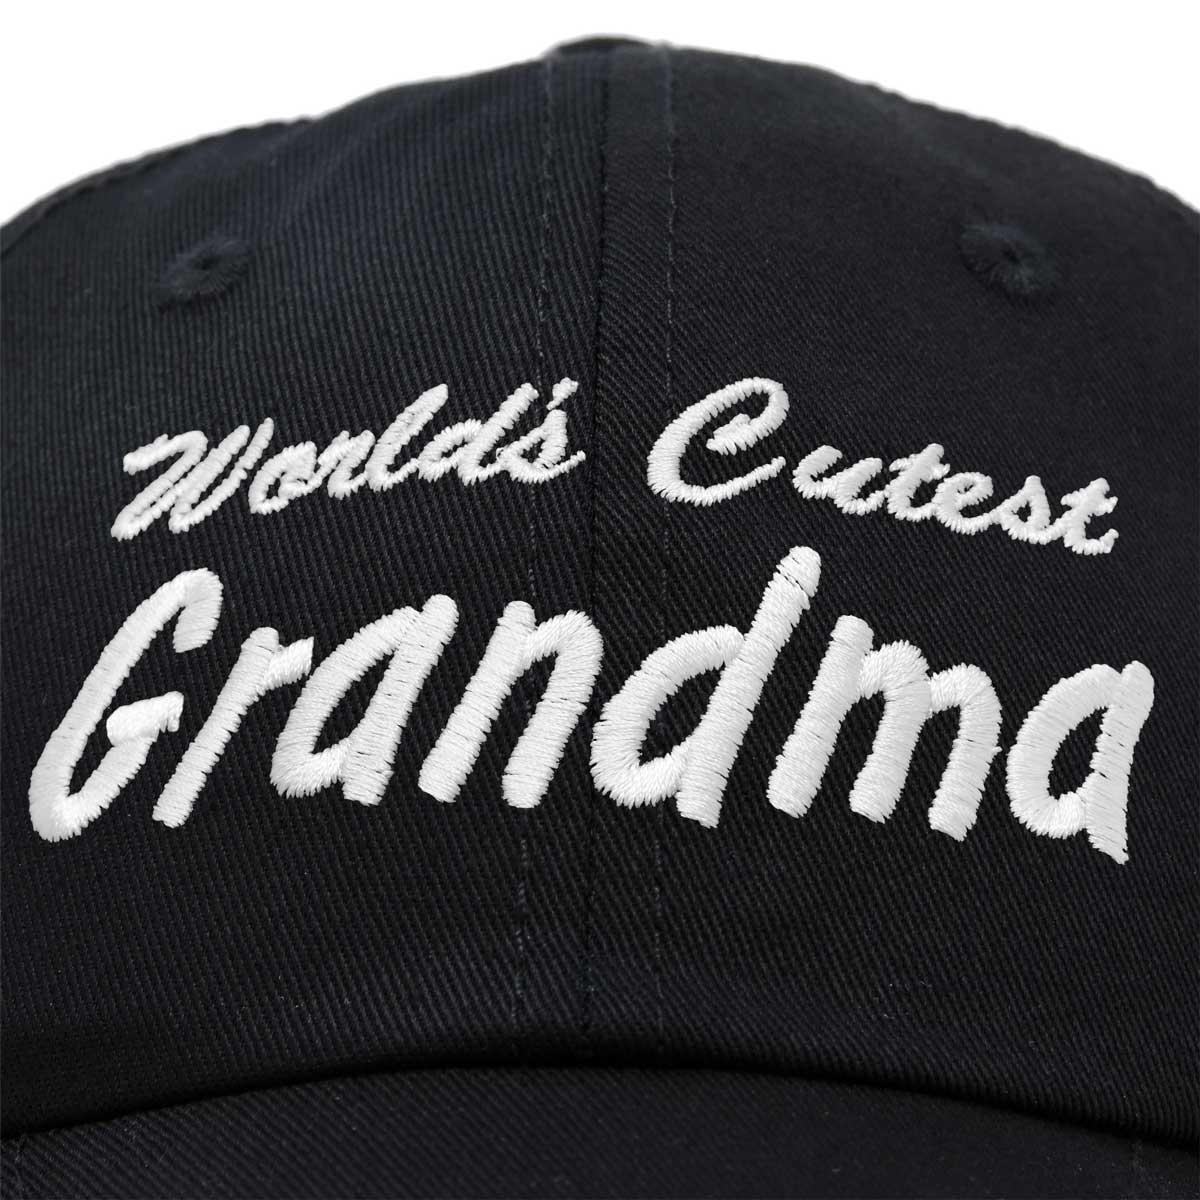 Dalix Worlds Cutest Grandma Hat